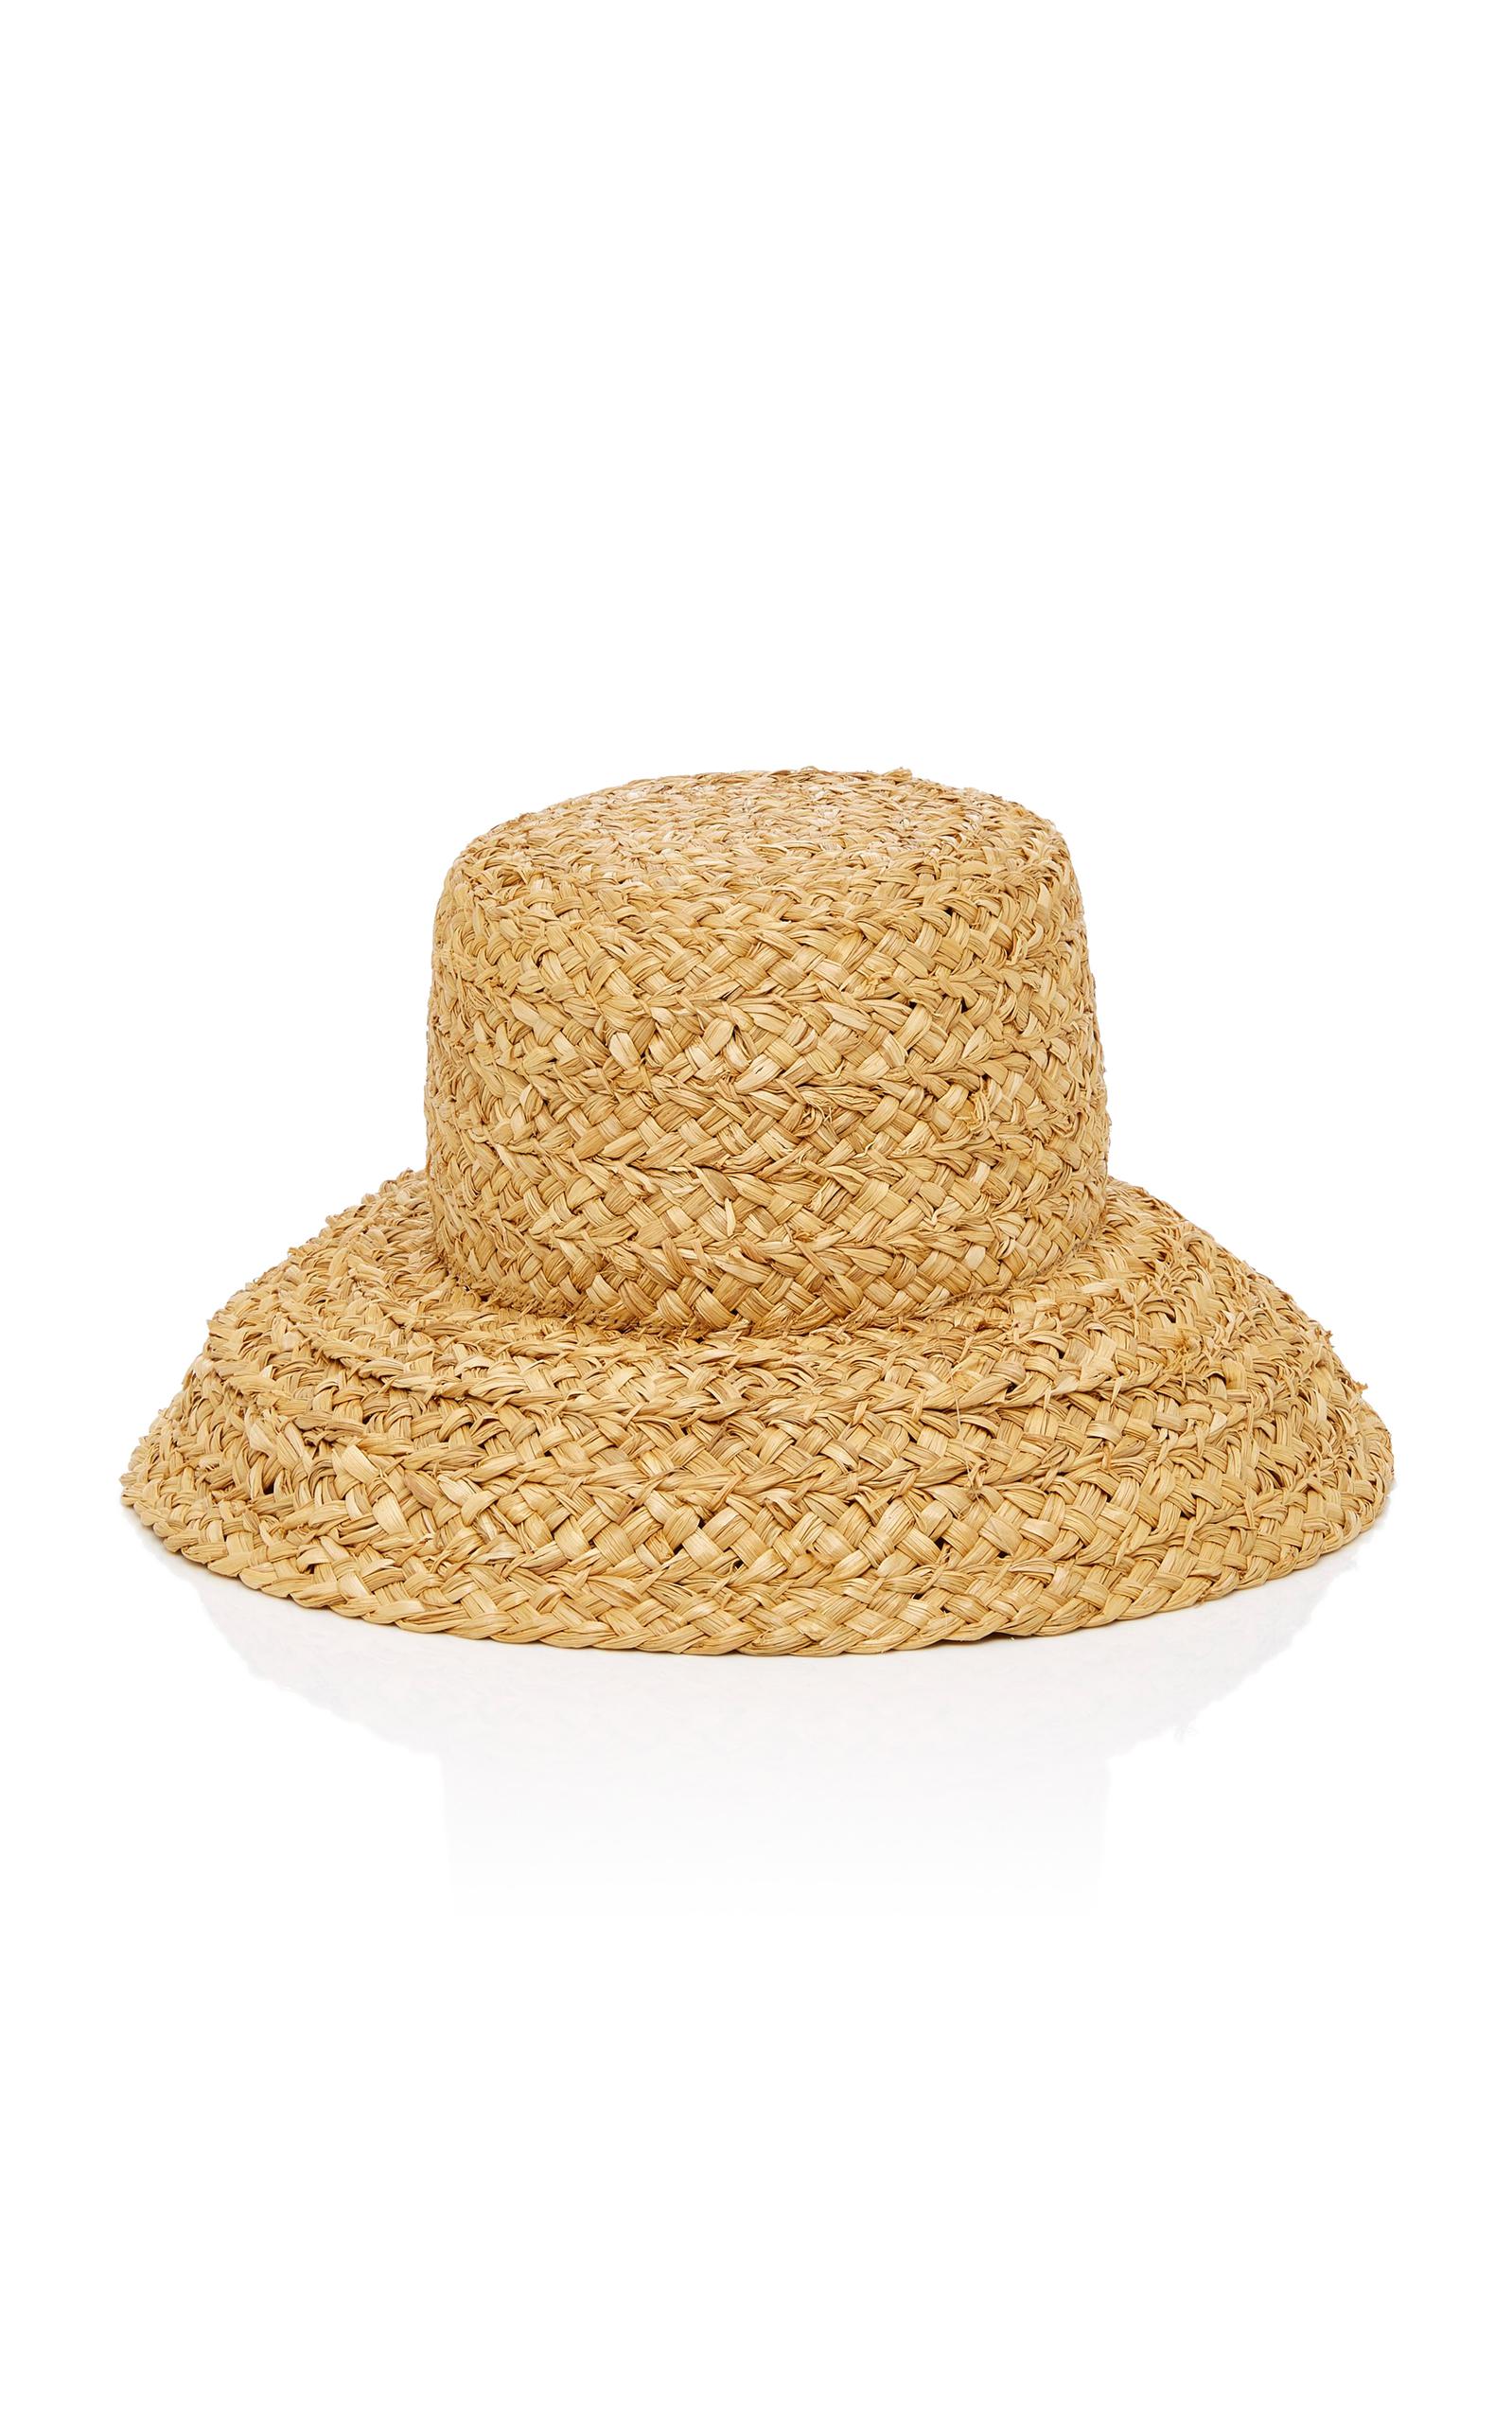 Janessa Leone Sydney Woven Straw Bucket Hat in Natural | Lyst